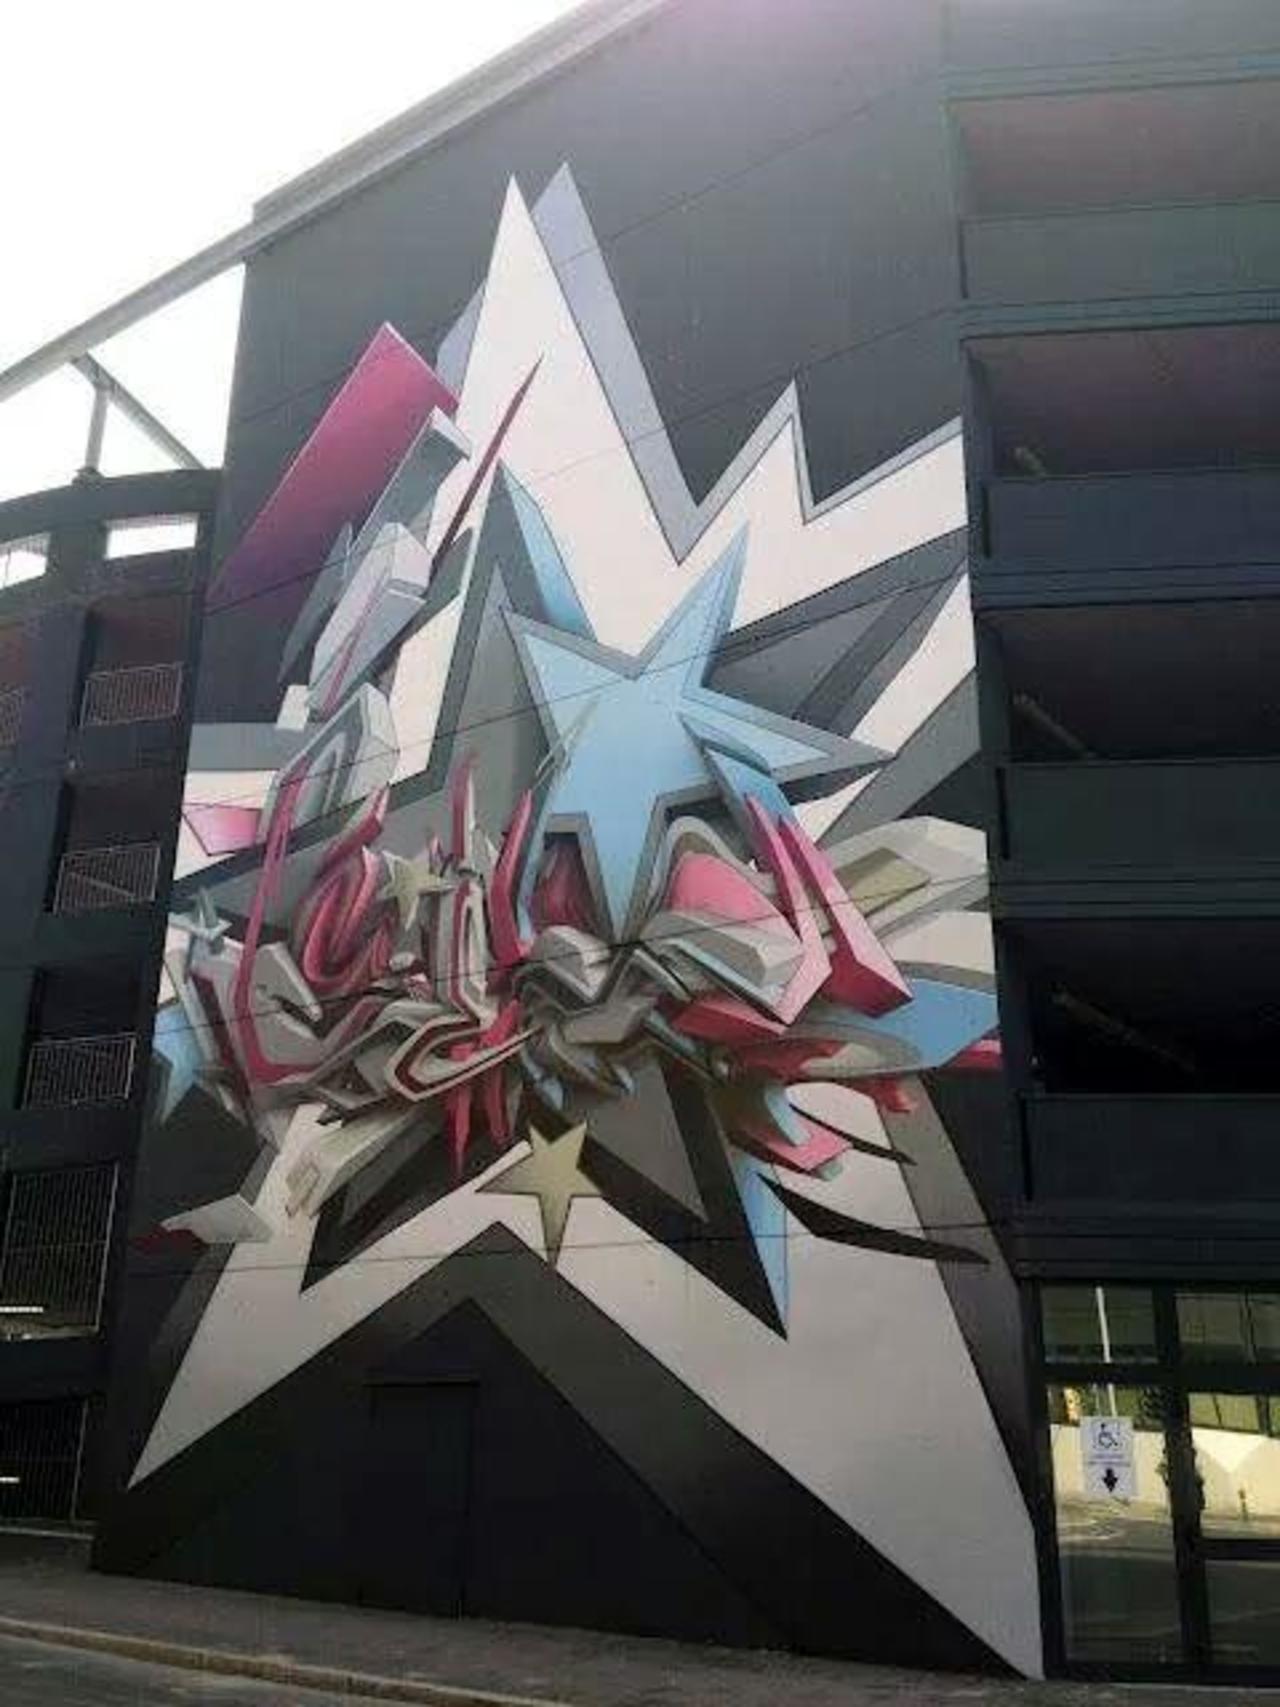 By Daim #graffiti #urbanart #streetart #spraypaint #stencil #art #mural http://t.co/oMcDh9eWZG